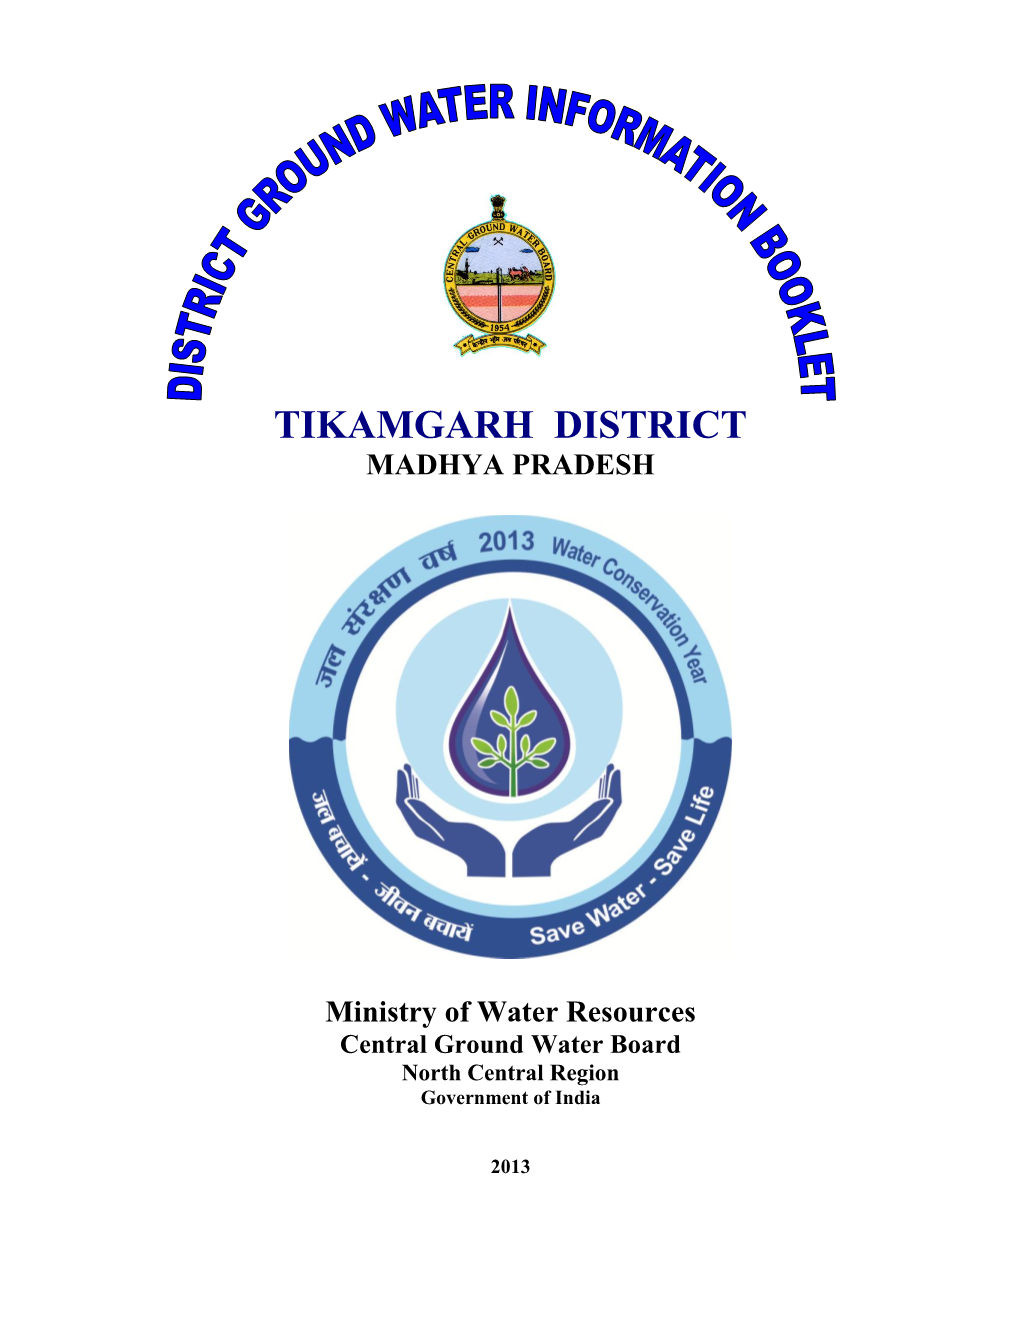 Tikamgarh District Madhya Pradesh